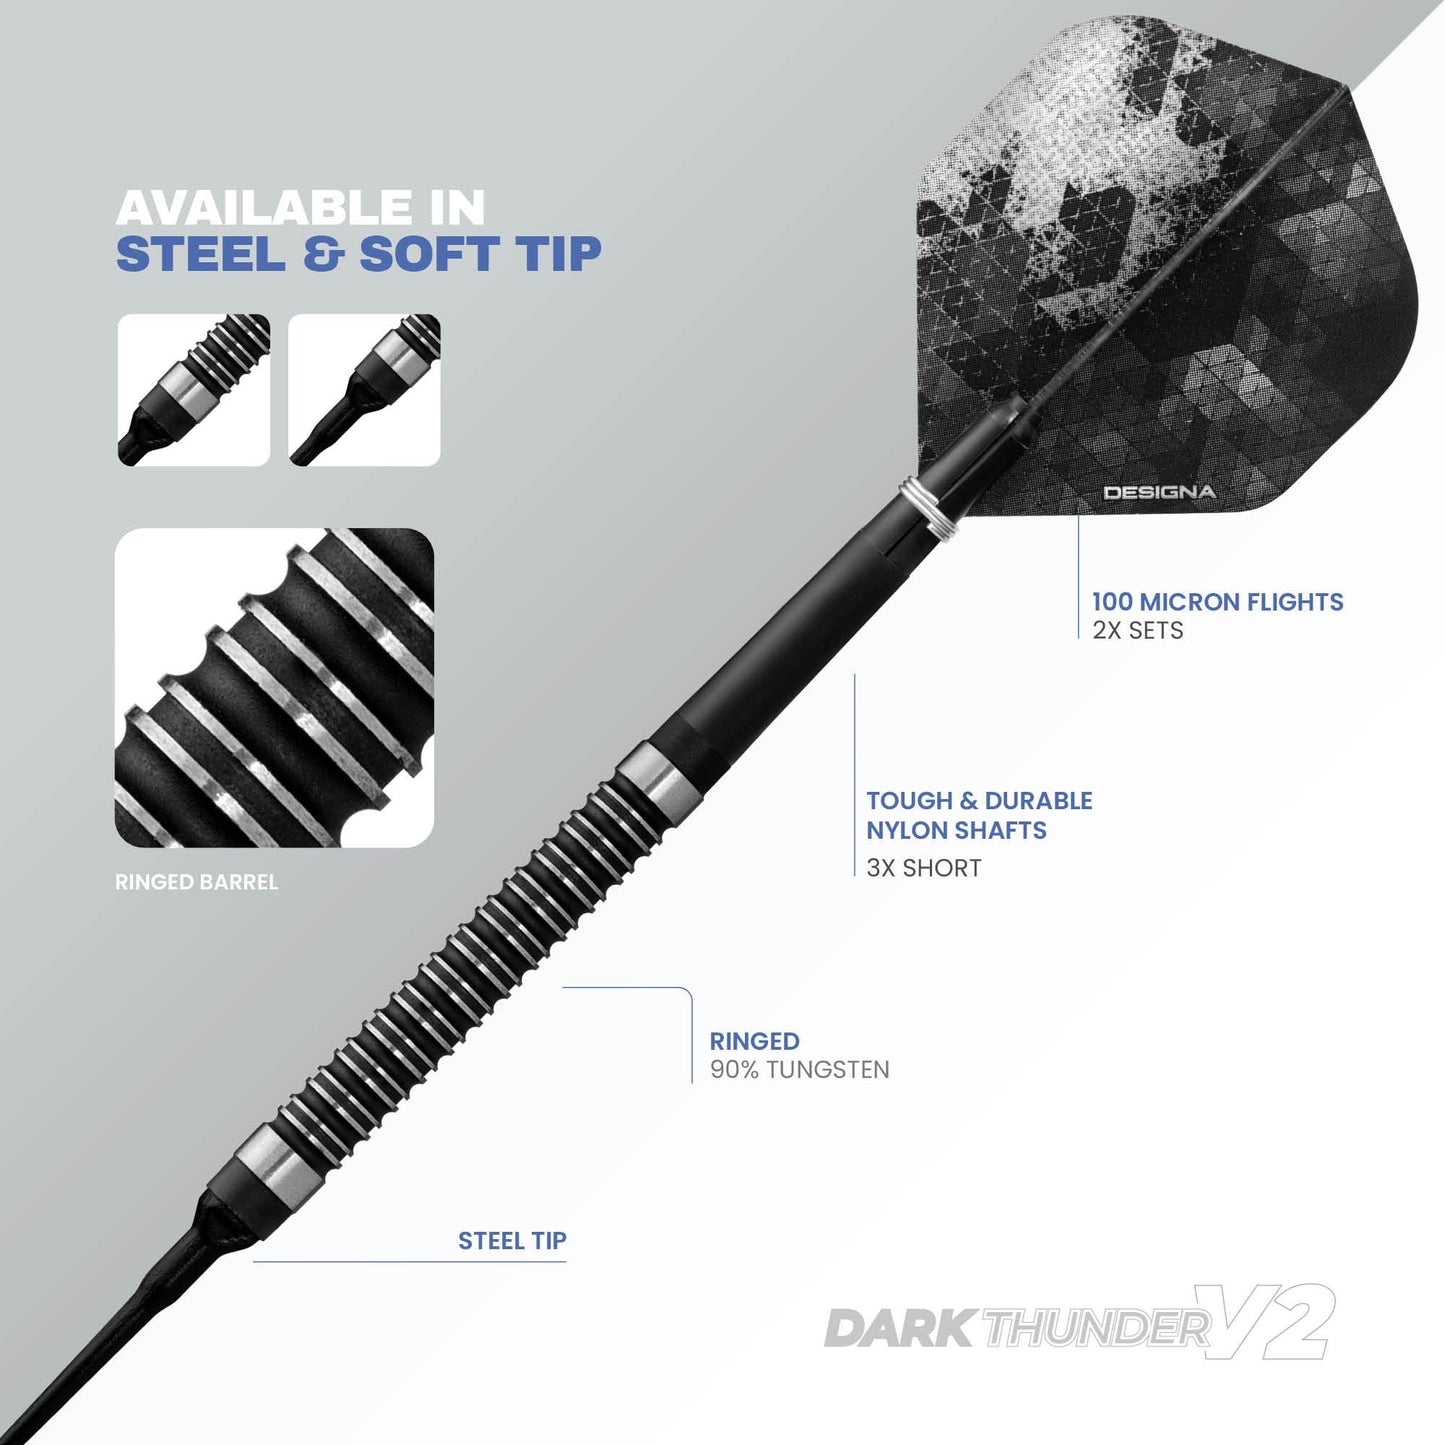 Designa Dark Thunder V2 Soft Tip Darts - Black